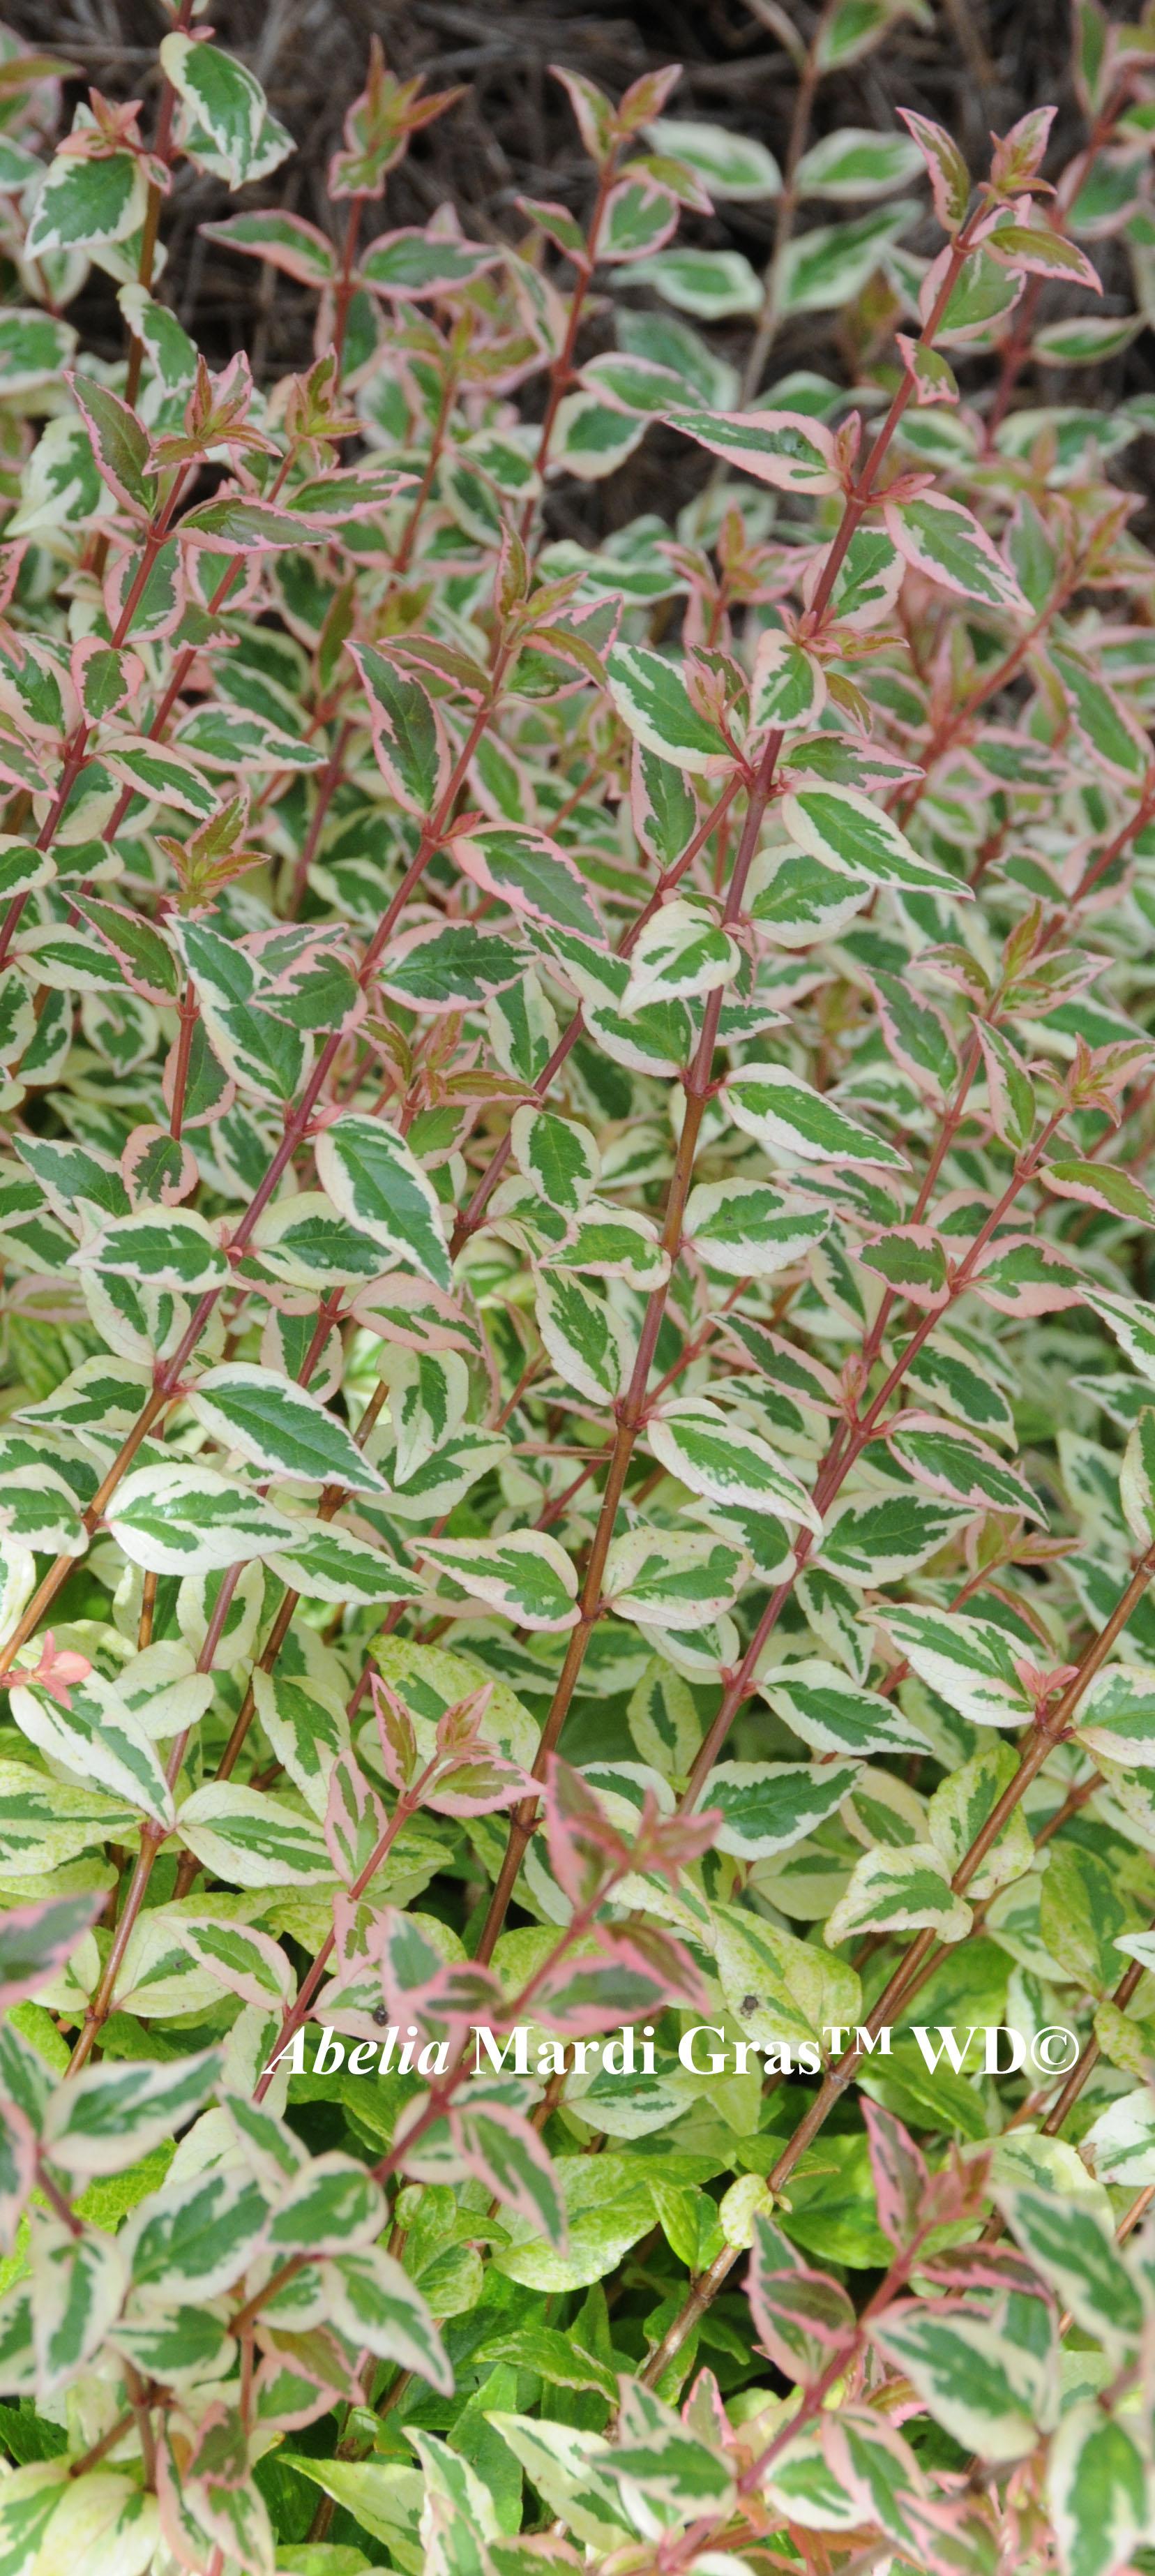 Abelia xgrandiflora Cultivars - Canyon Creek and others